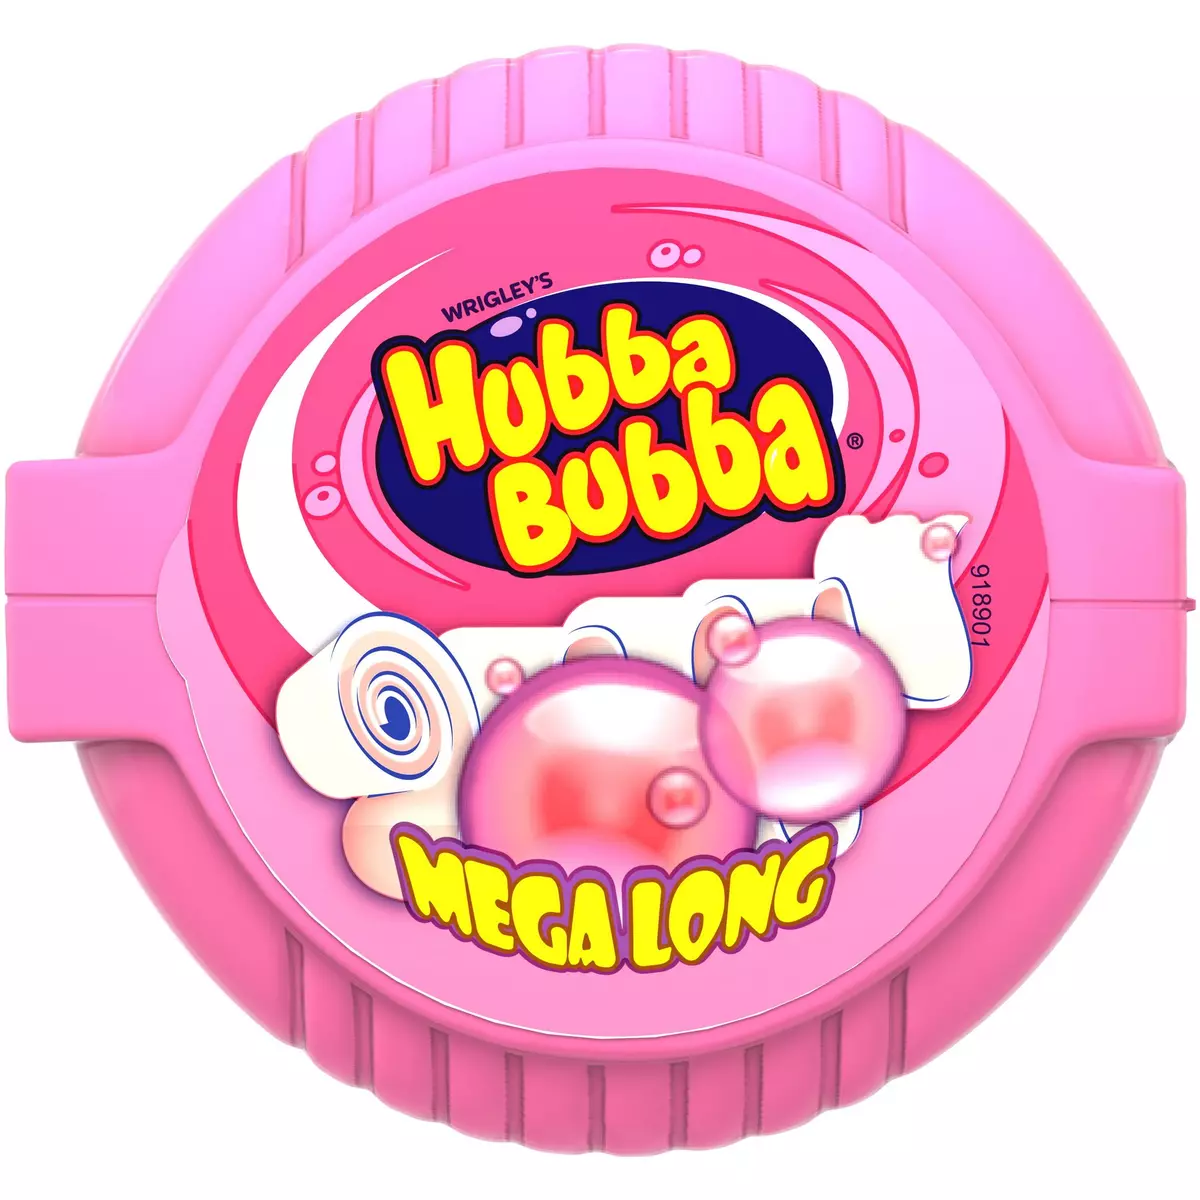 HUBBA BUBBA Chewing gum rouleau mega long 56g